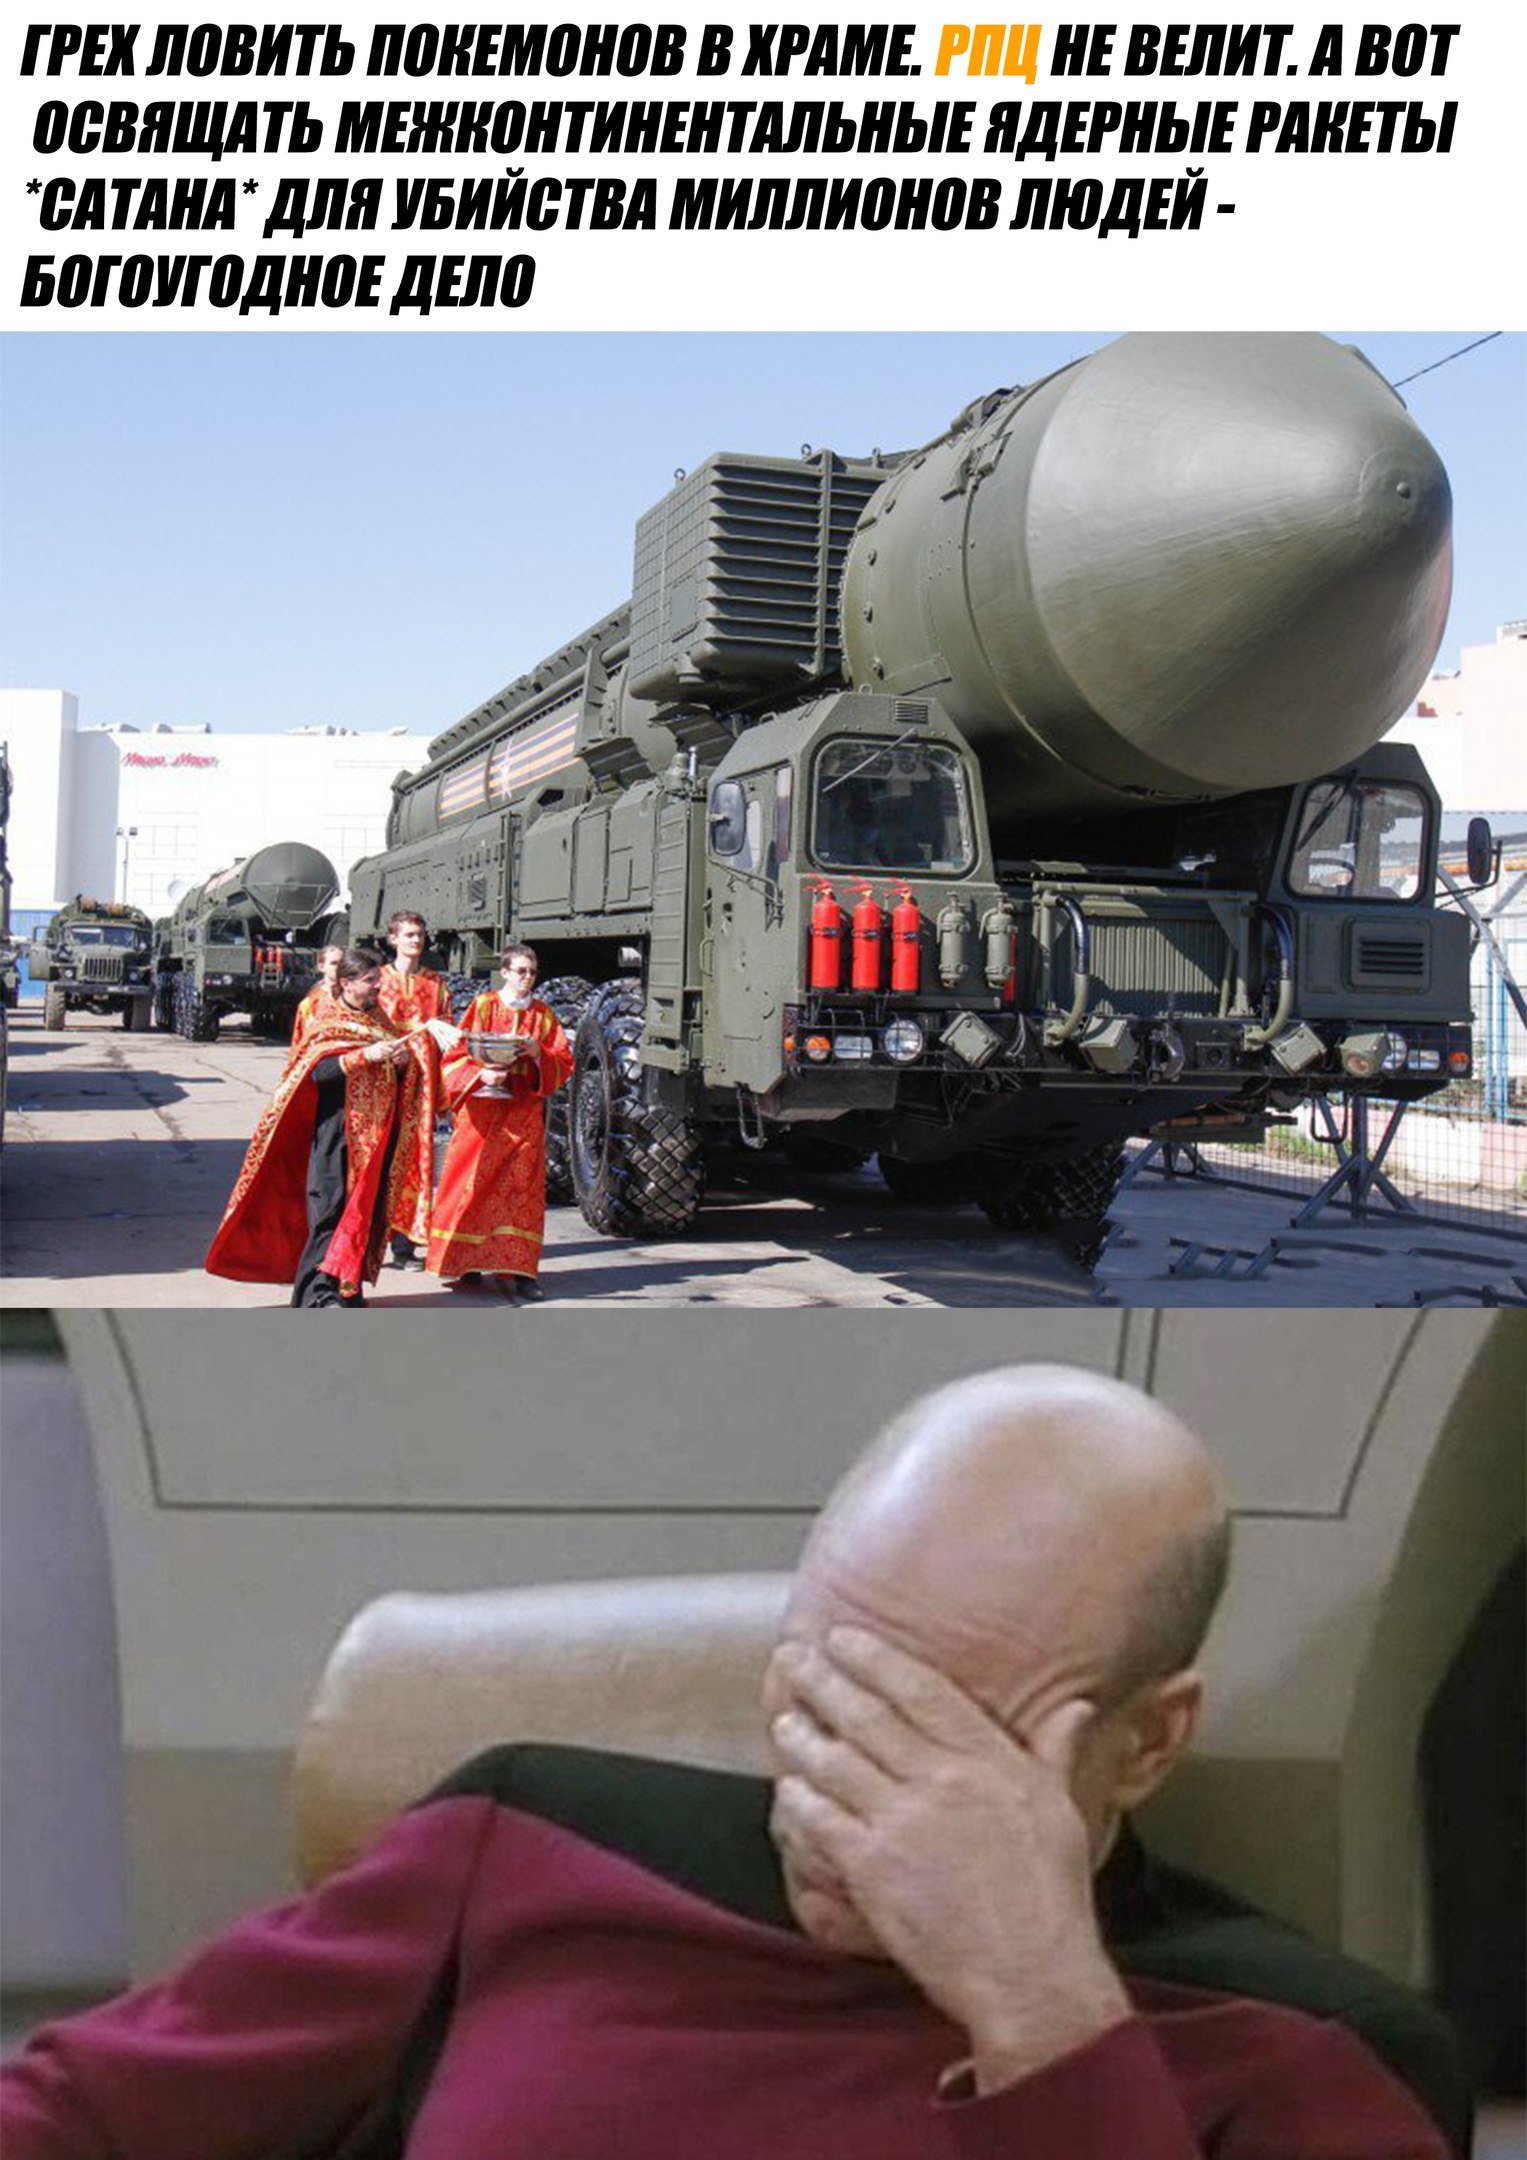 РПЦ освящает ракеты сатана